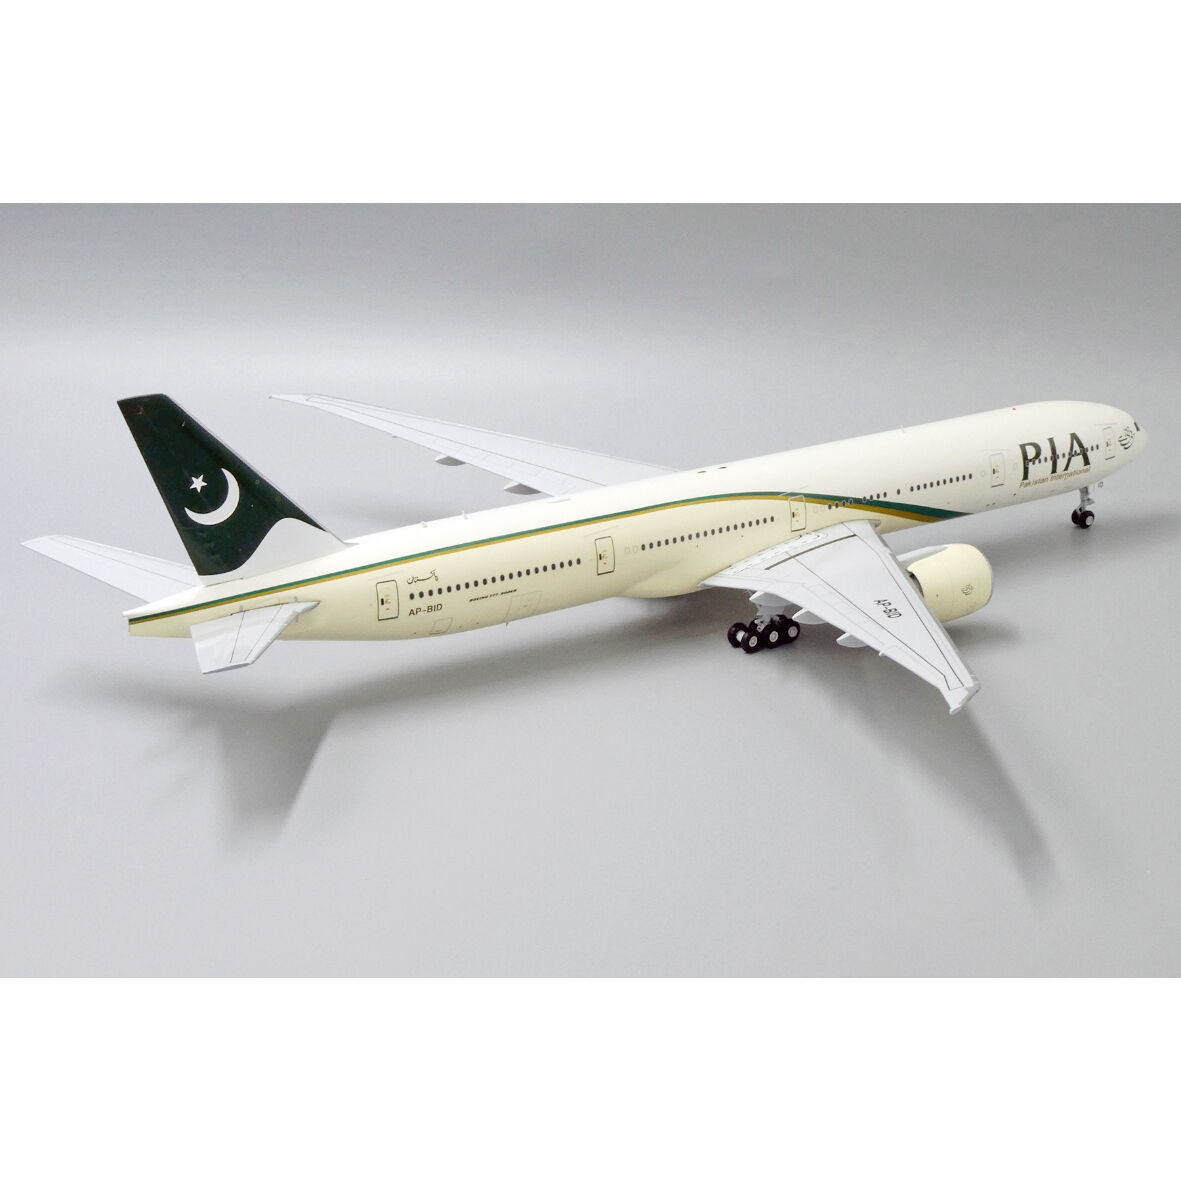 1/200 B777-300ER PIAパキスタン国際航空 AP-BID Limited